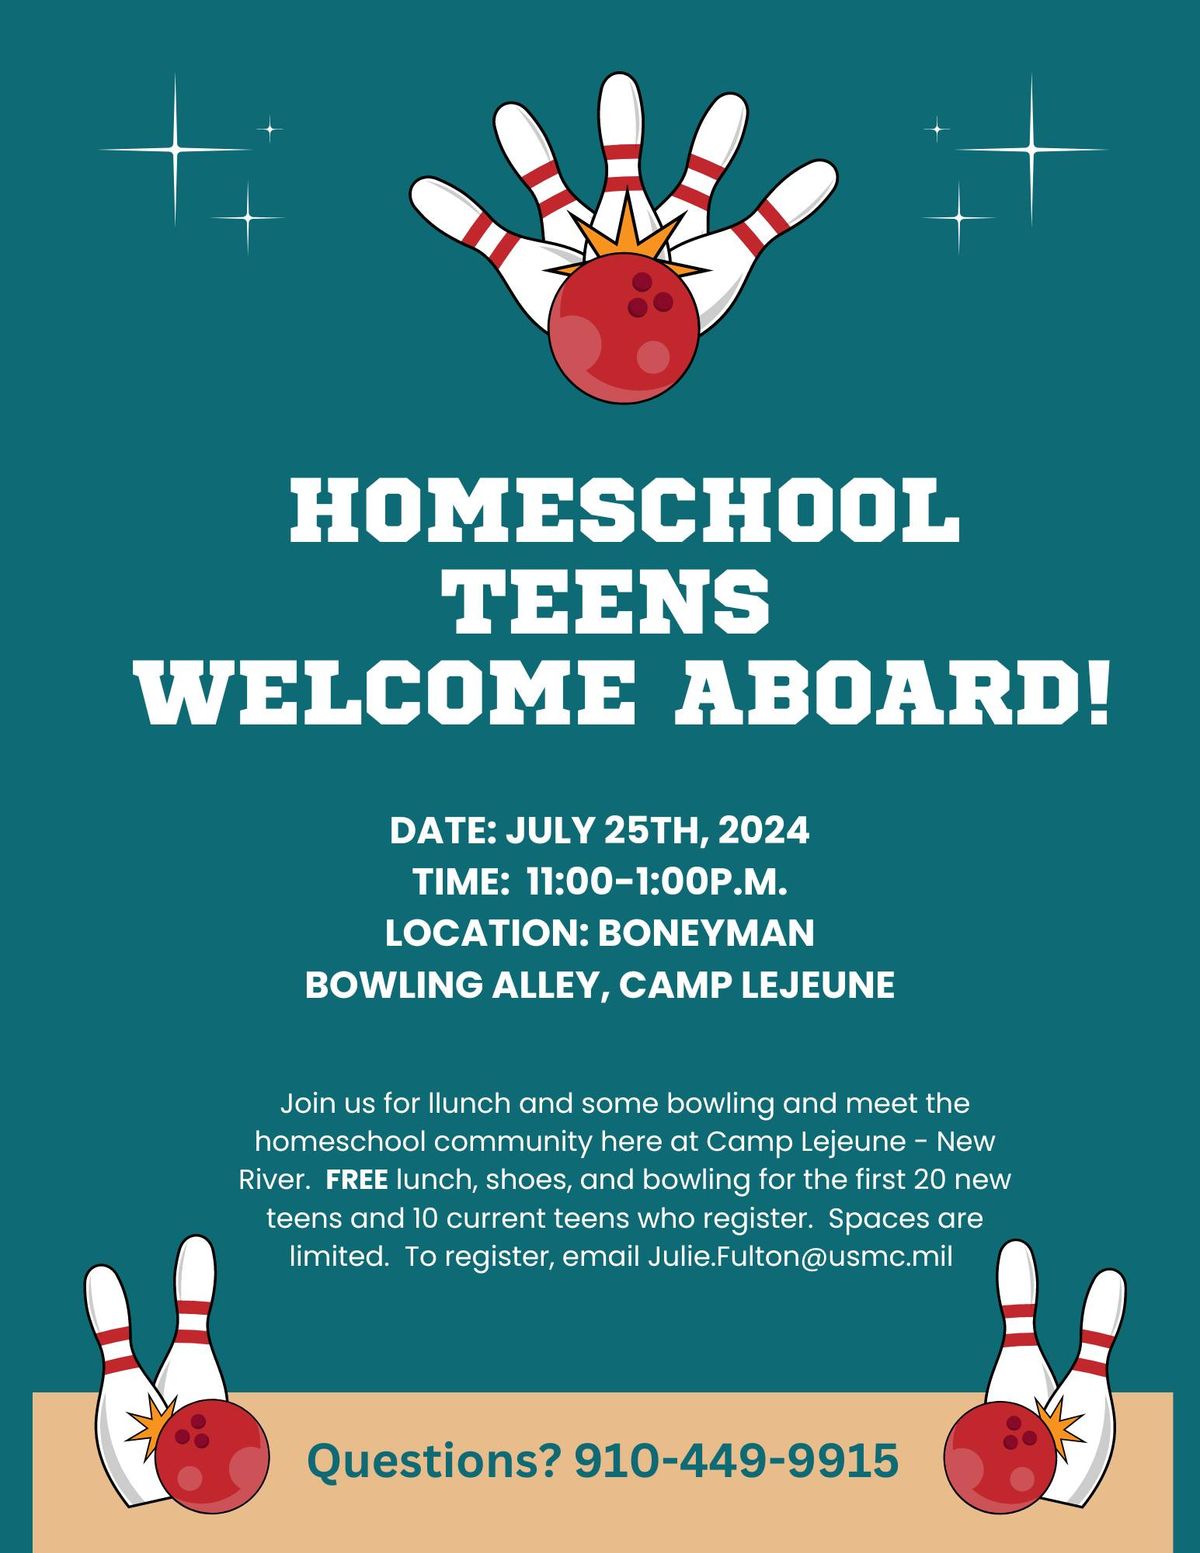 Homeschool Teen Welcome Aboard